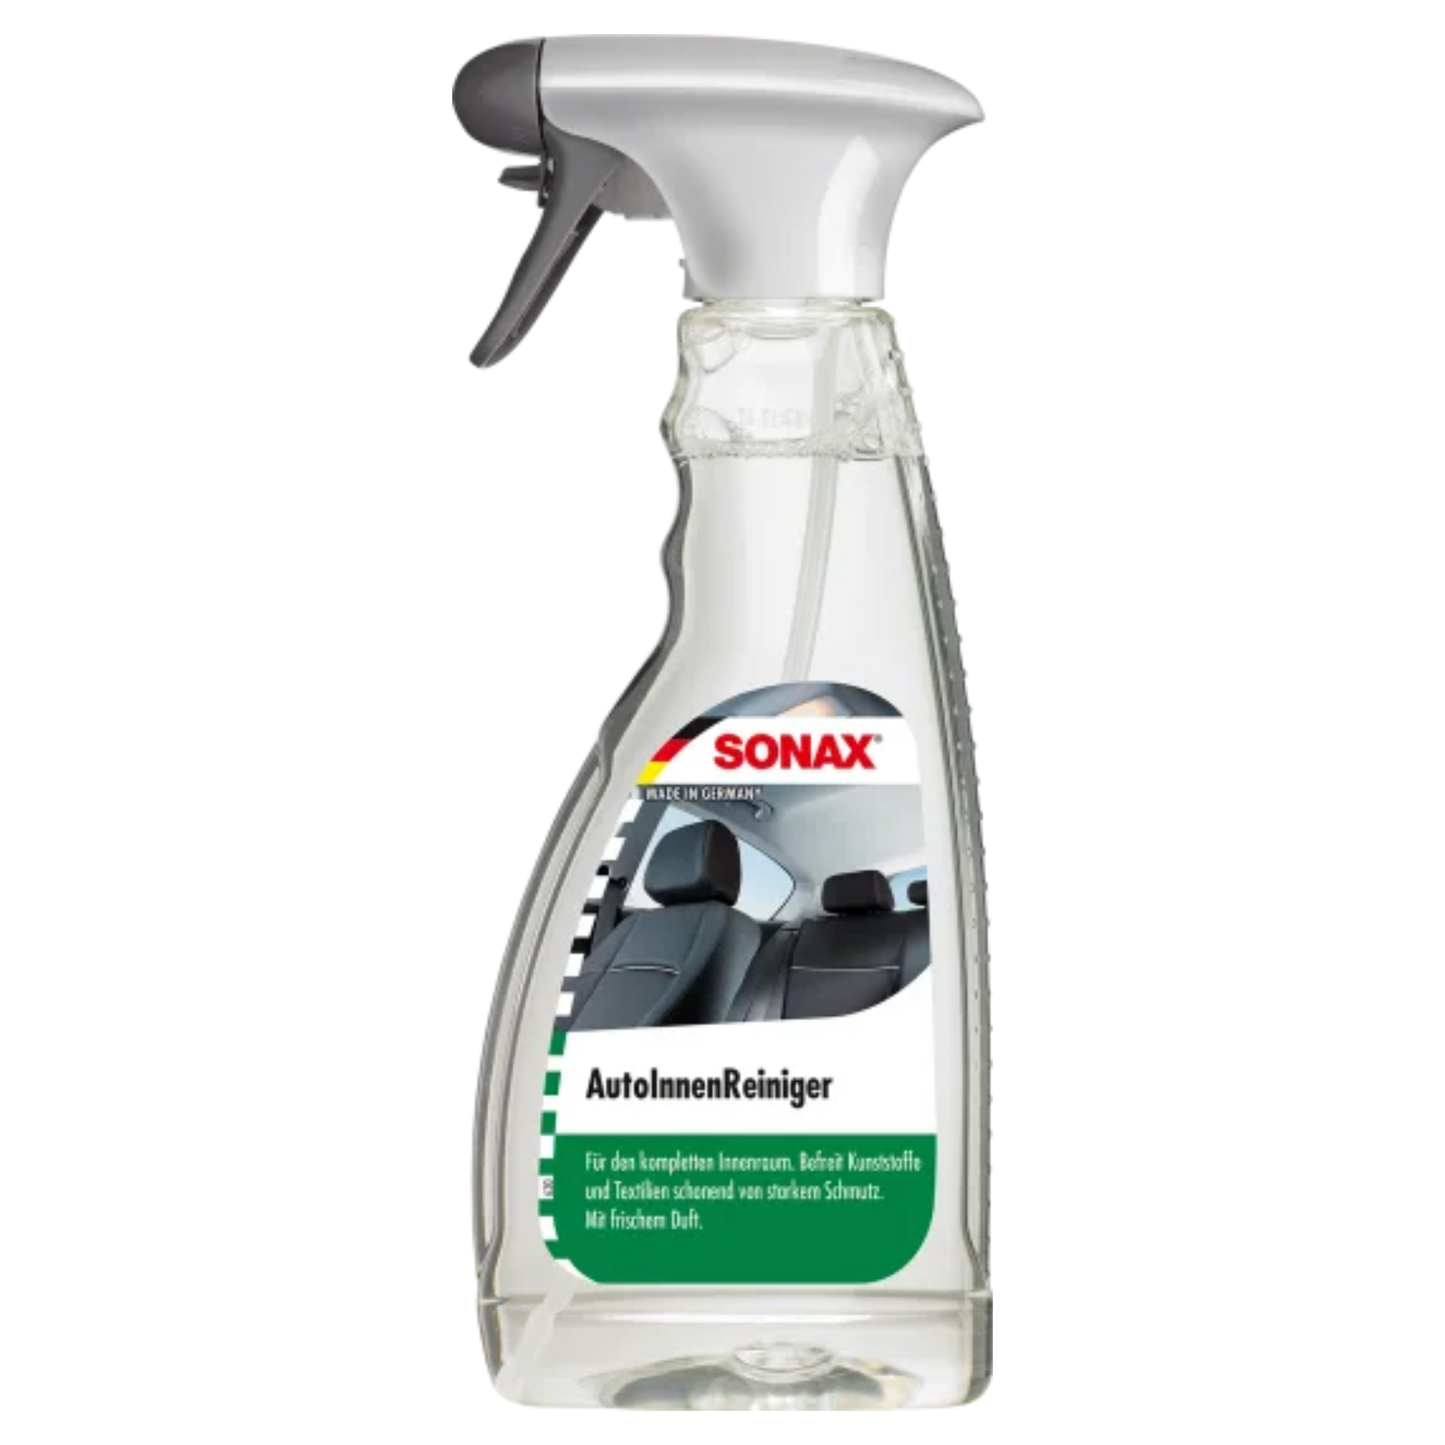 SONAX car interior cleaner, 500ml